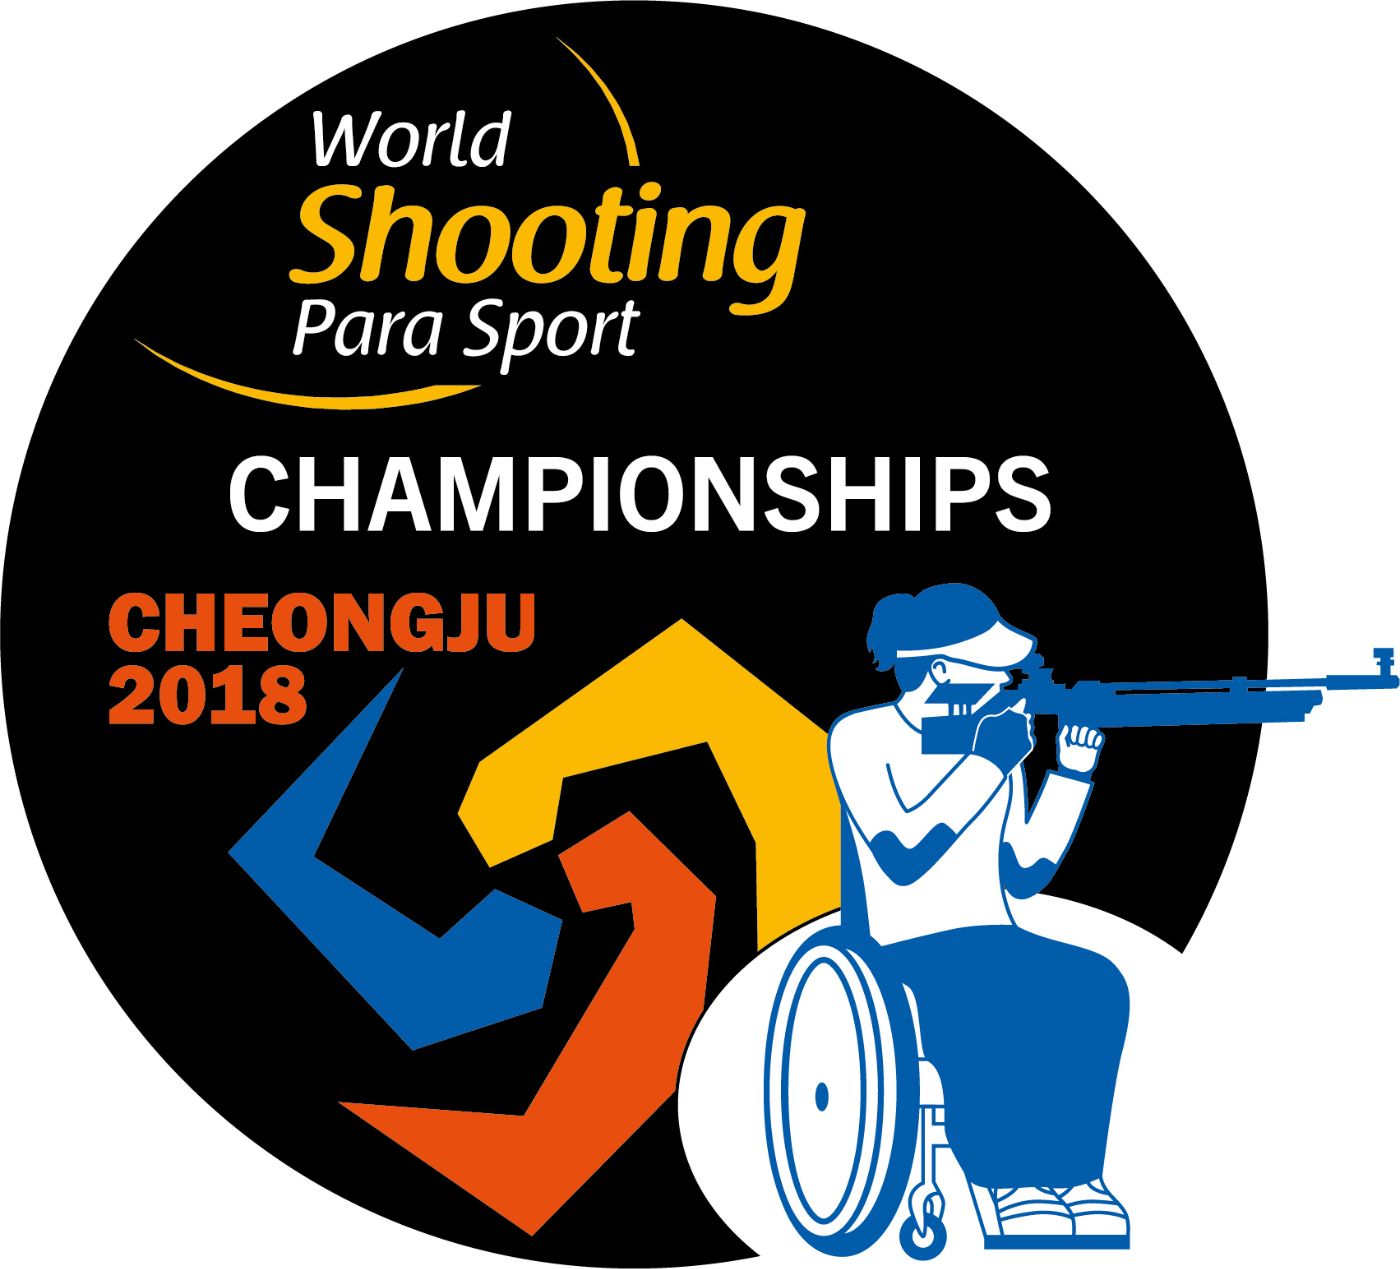 Cheongju 2018 World Shooting Para Sport Championships Logo